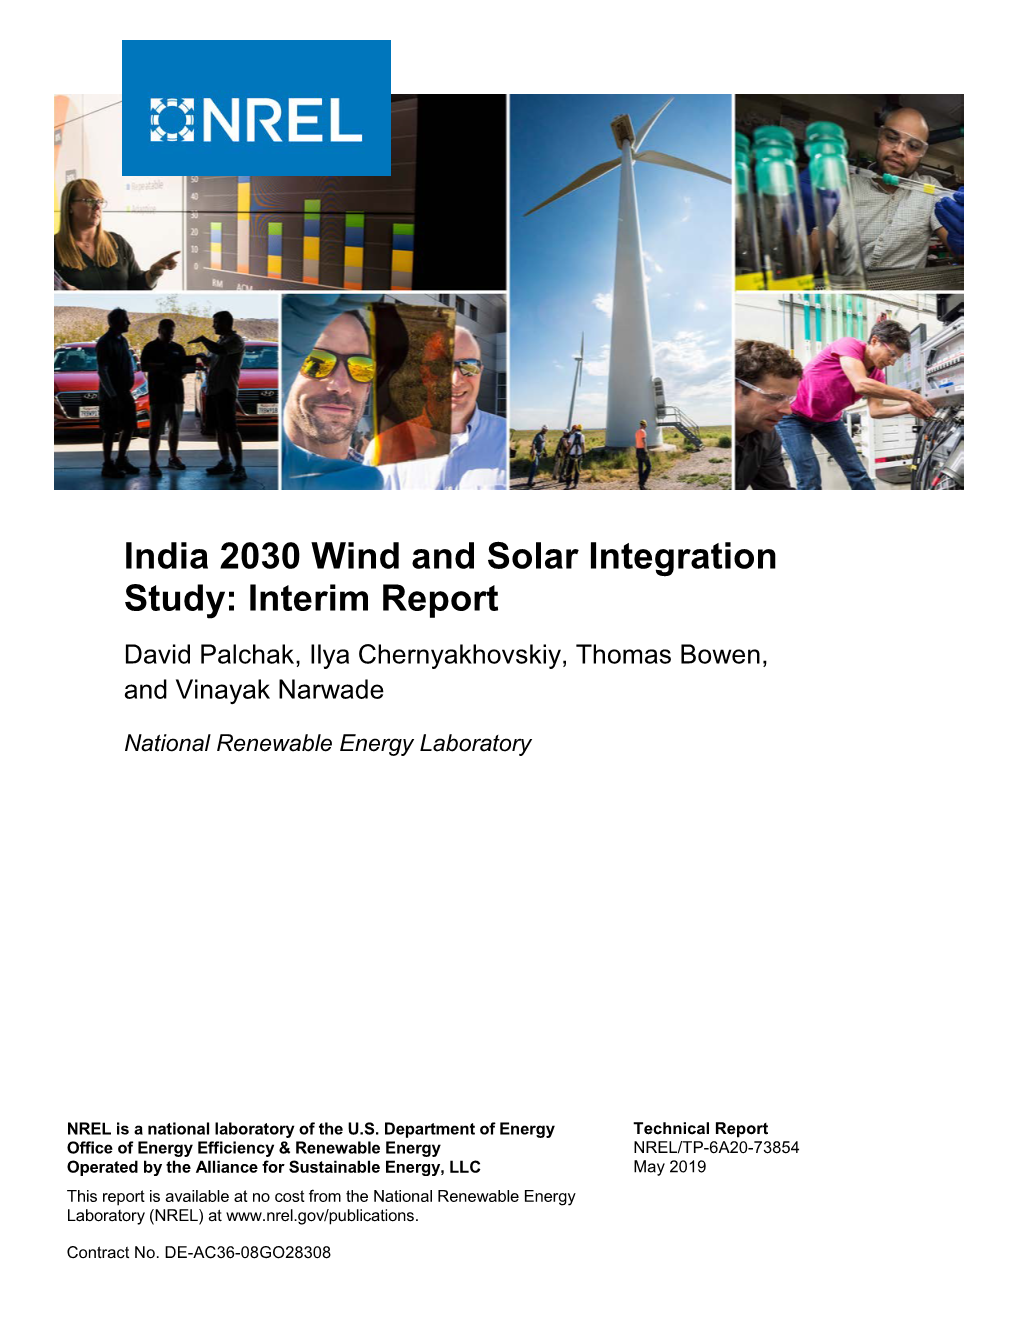 India 2030 Wind and Solar Integration Study: Interim Report David Palchak, Ilya Chernyakhovskiy, Thomas Bowen, and Vinayak Narwade